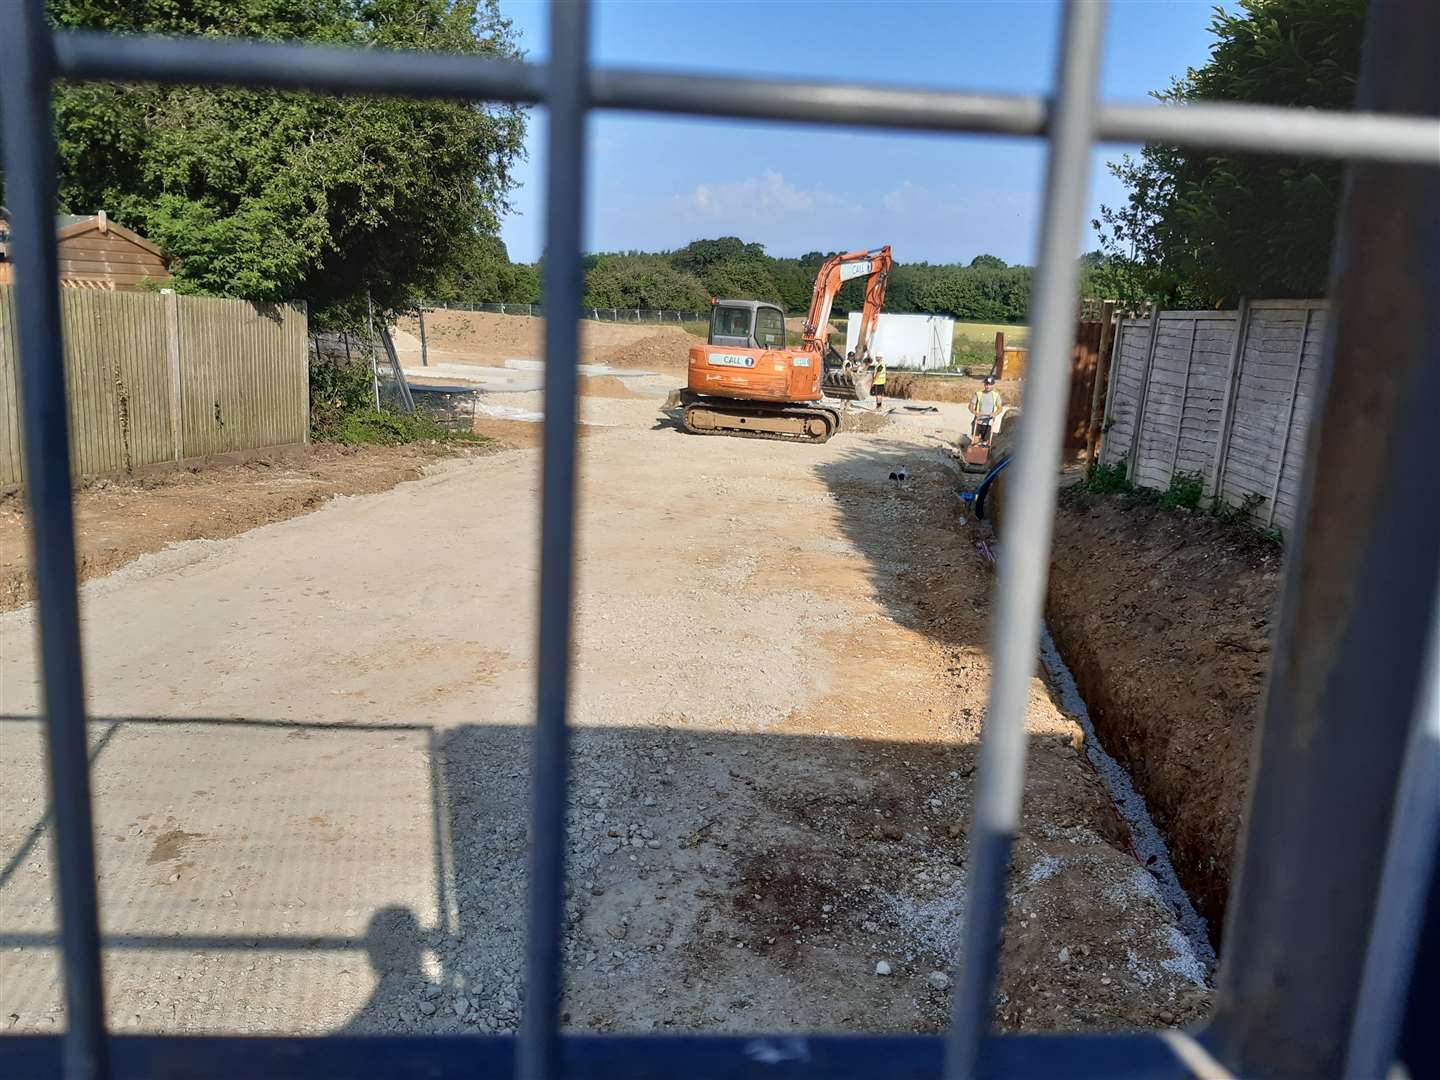 Construction has already begun on the site